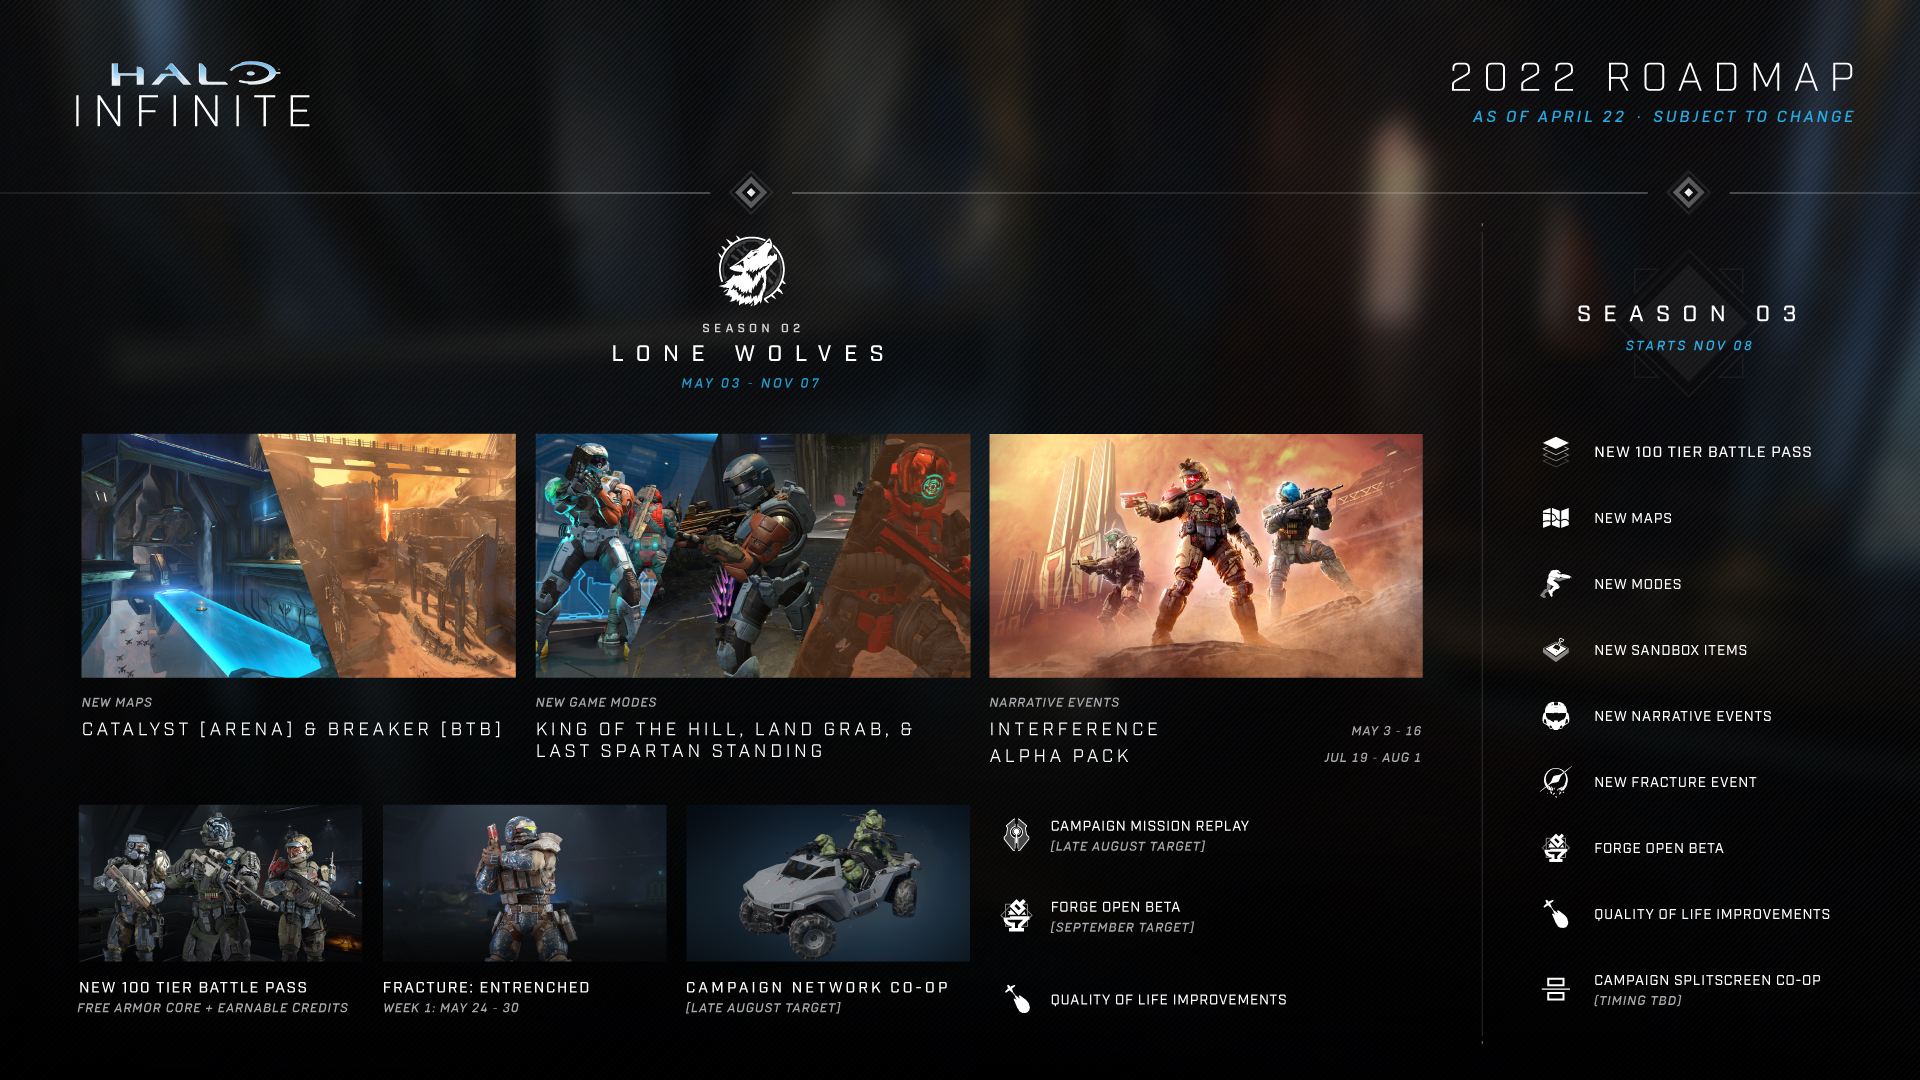 Halo Infinite's Roadmap for 2022 Starting April 22